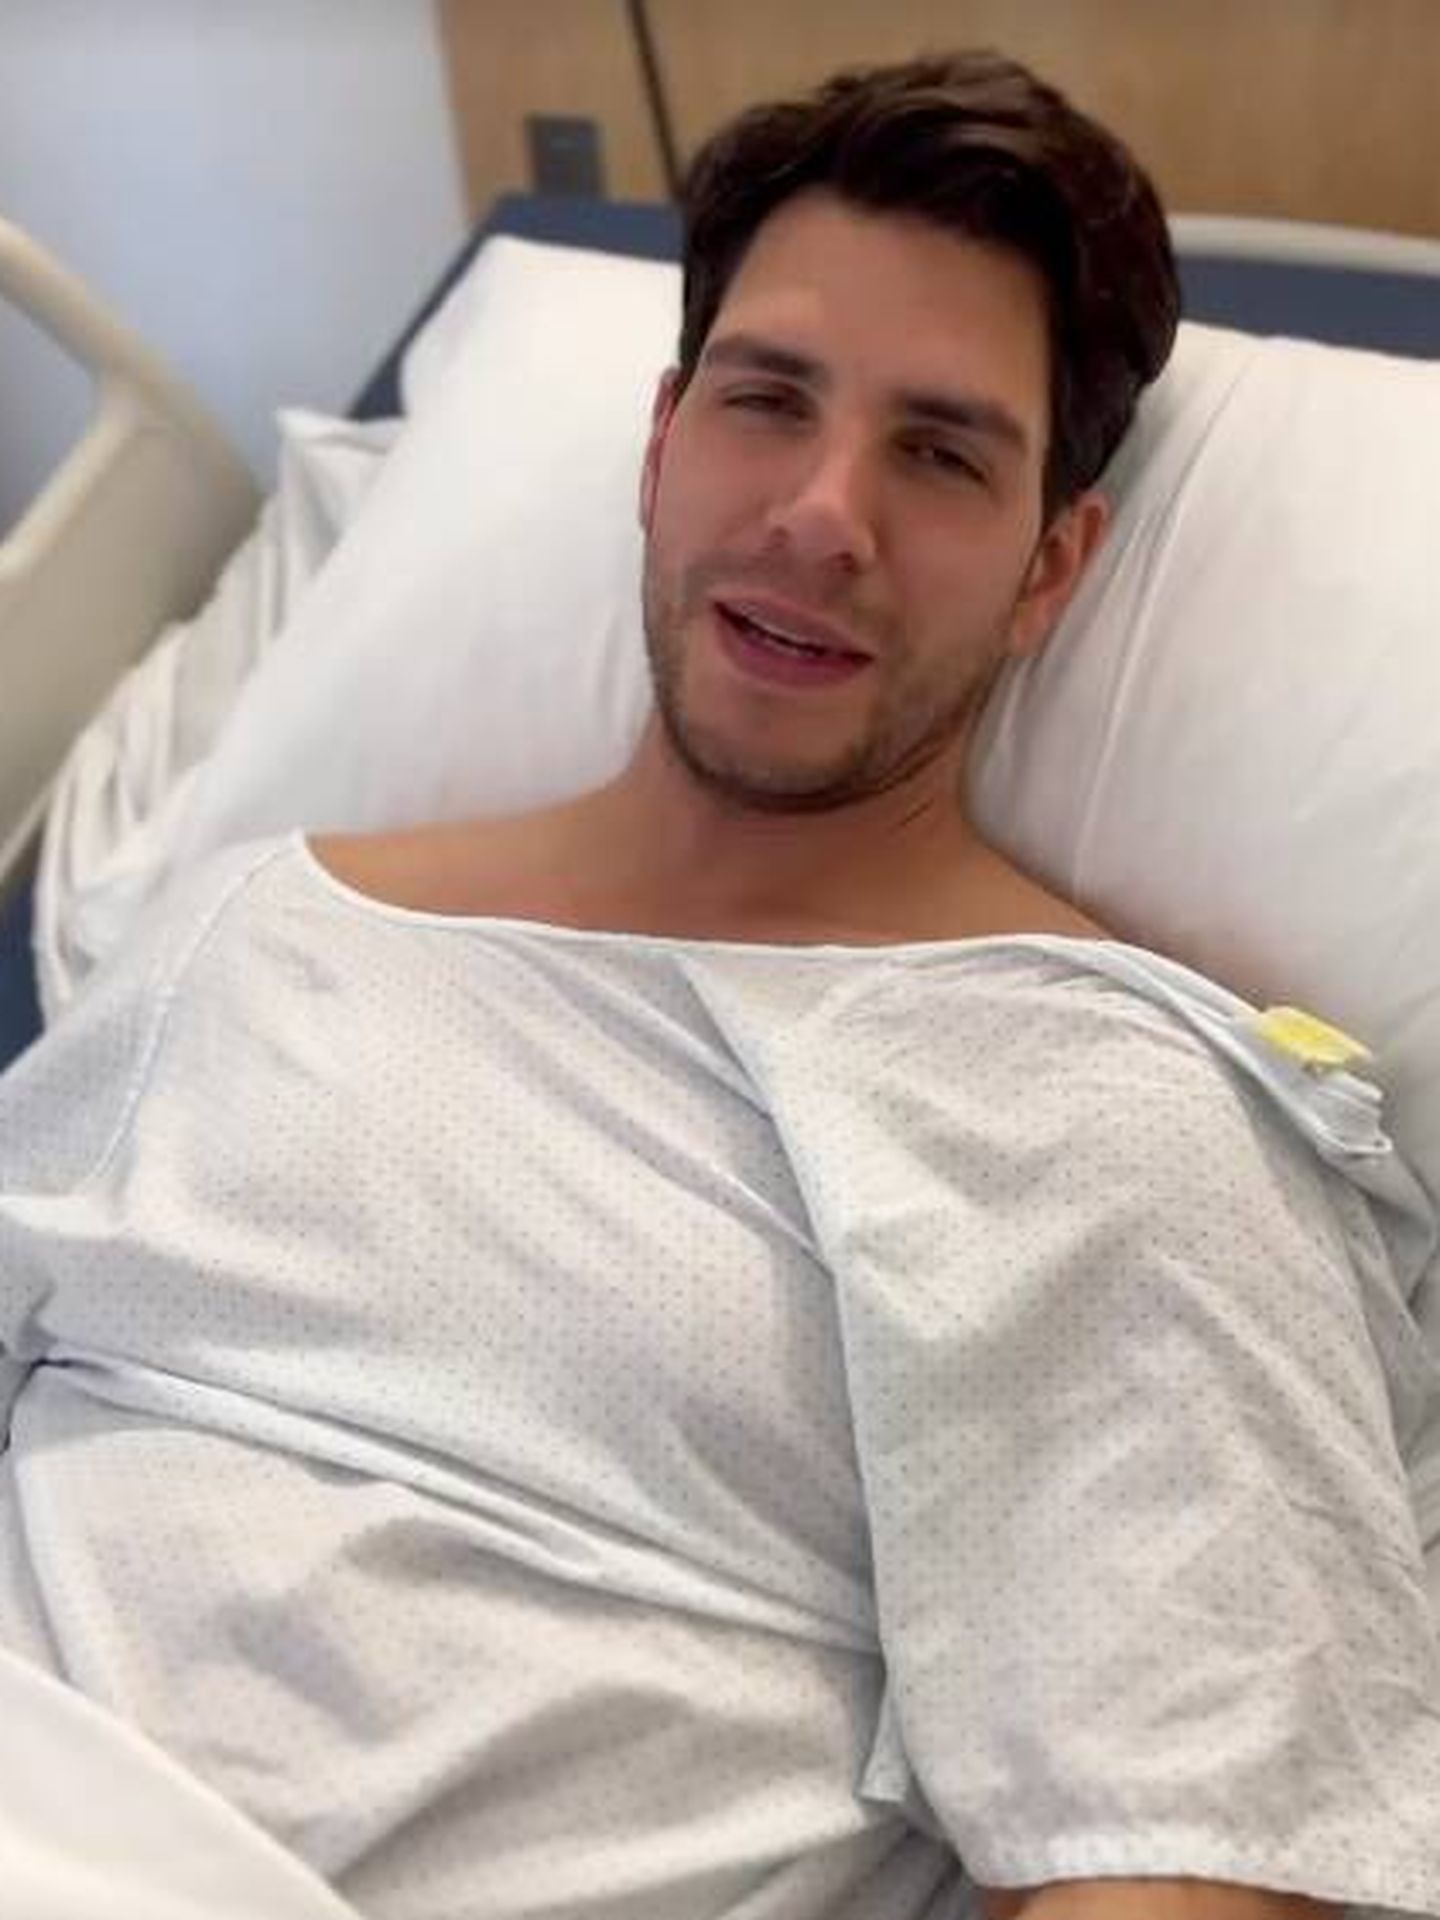  Diego Matamoros, en el hospital. (Instagram/@diegomatflo)